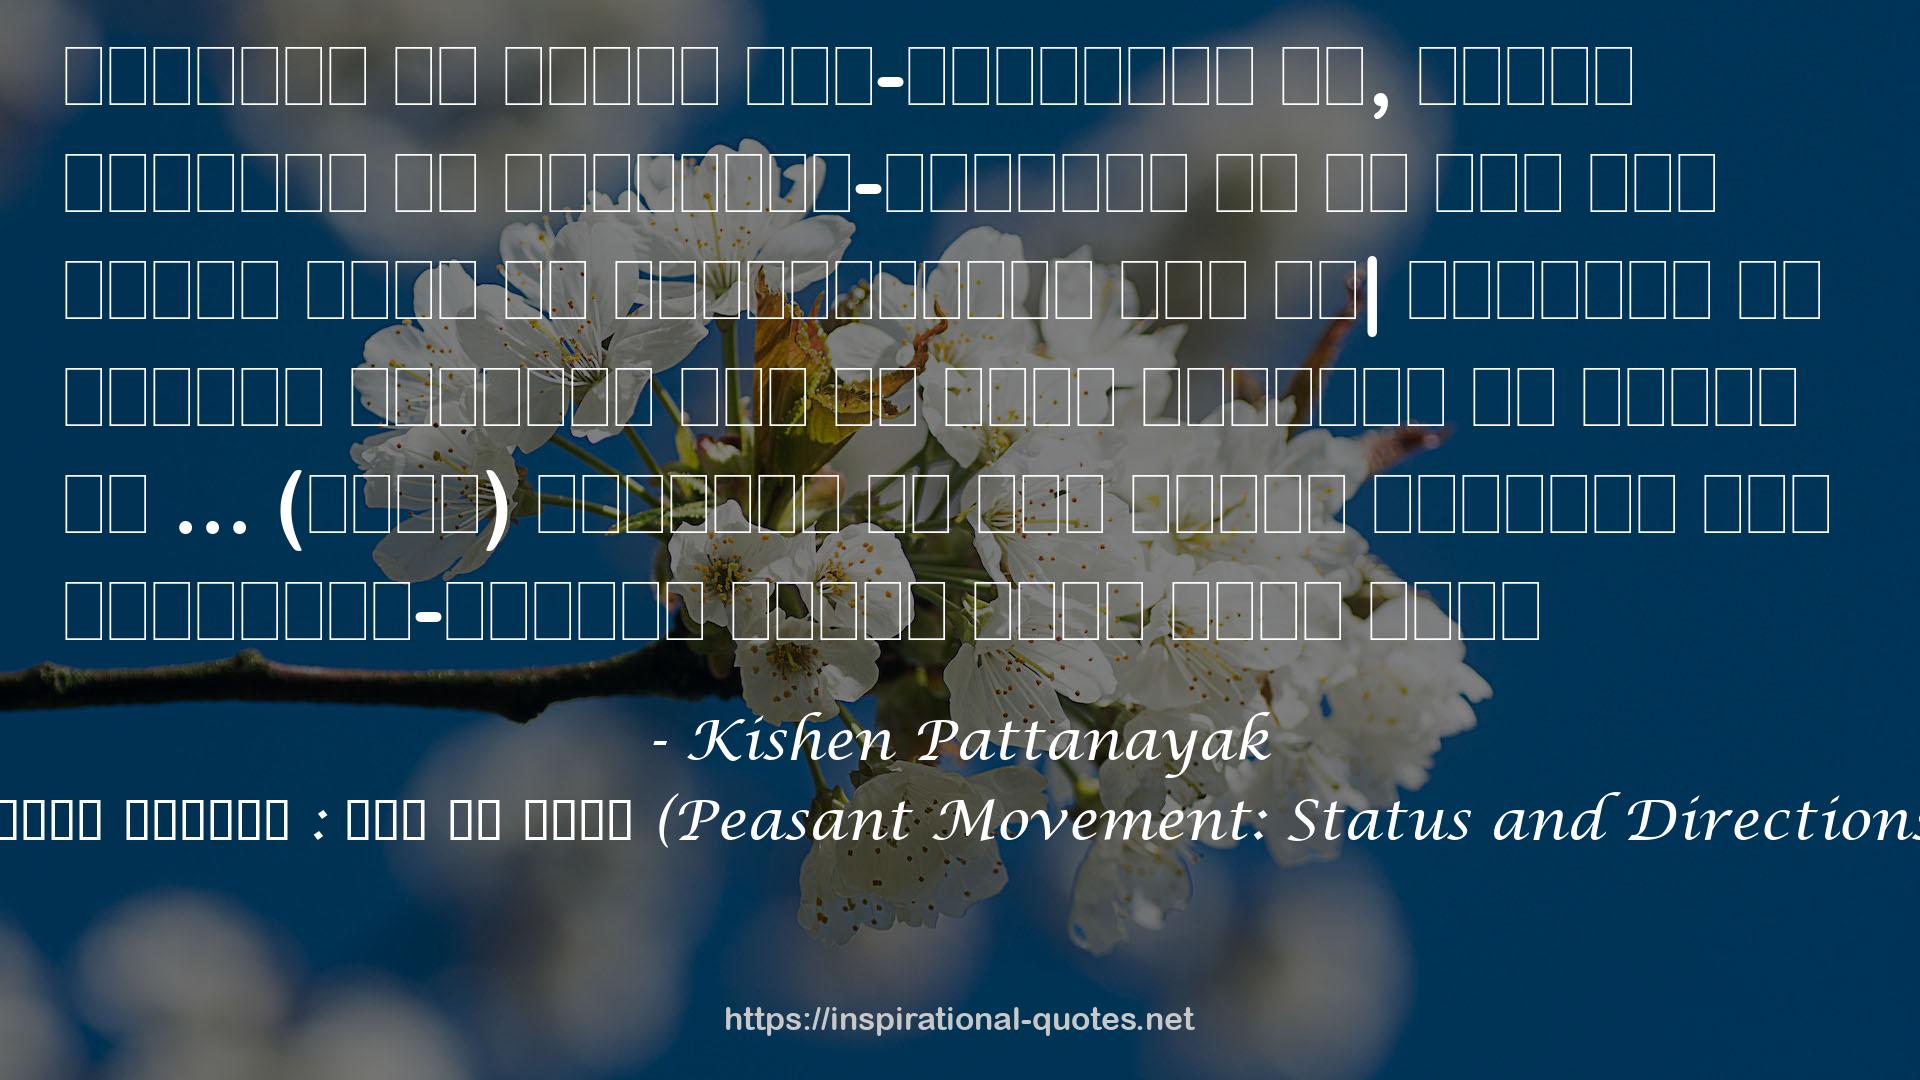 किसान आंदोलन : दशा और दिशा (Peasant Movement: Status and Directions) QUOTES